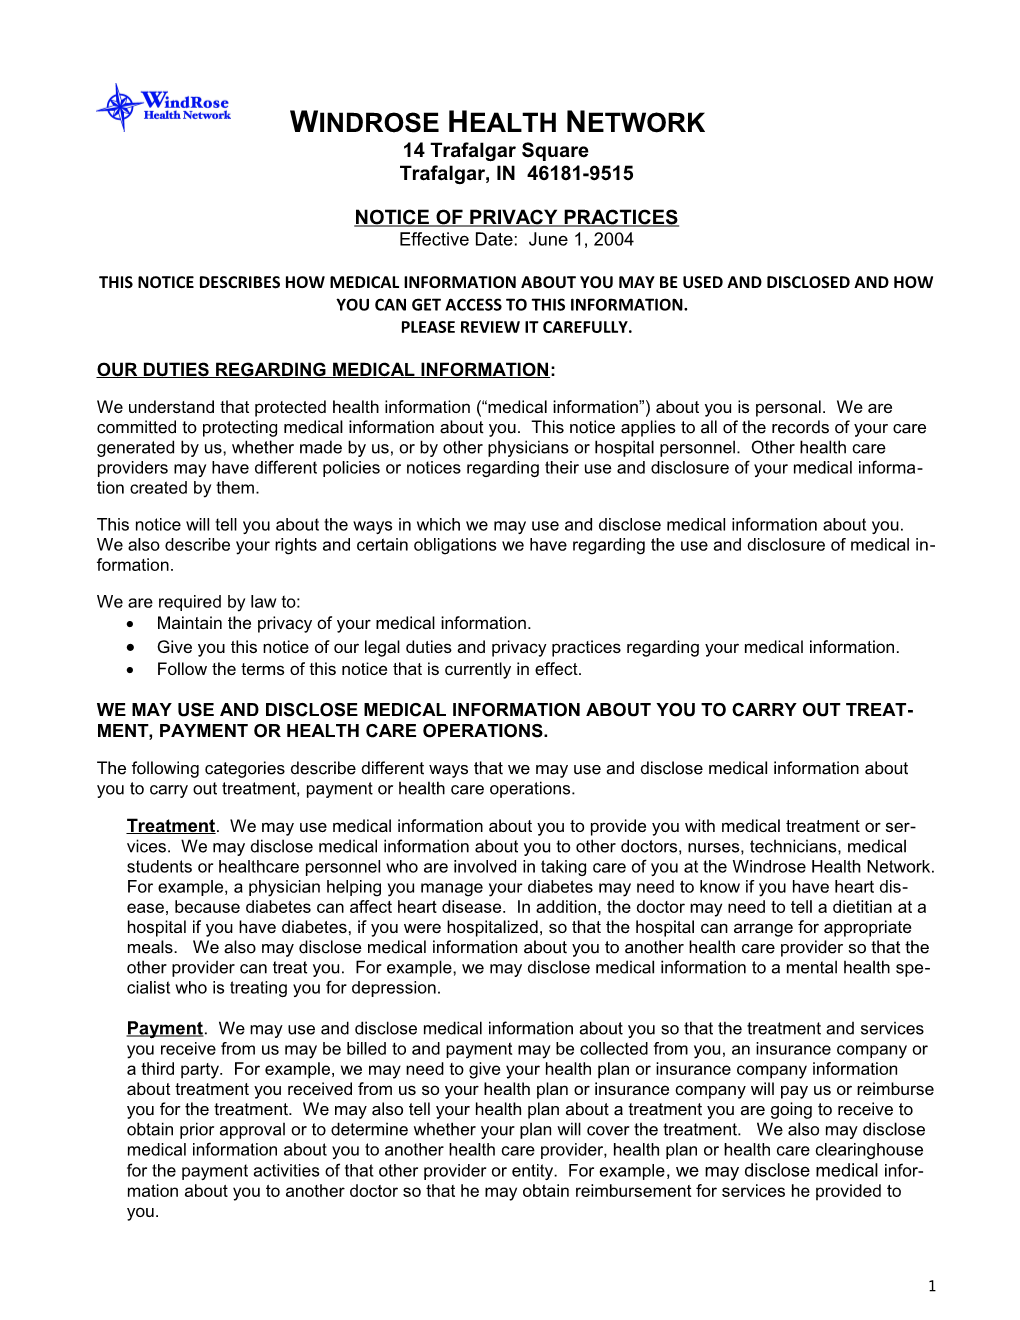 Model HIPAA Notice